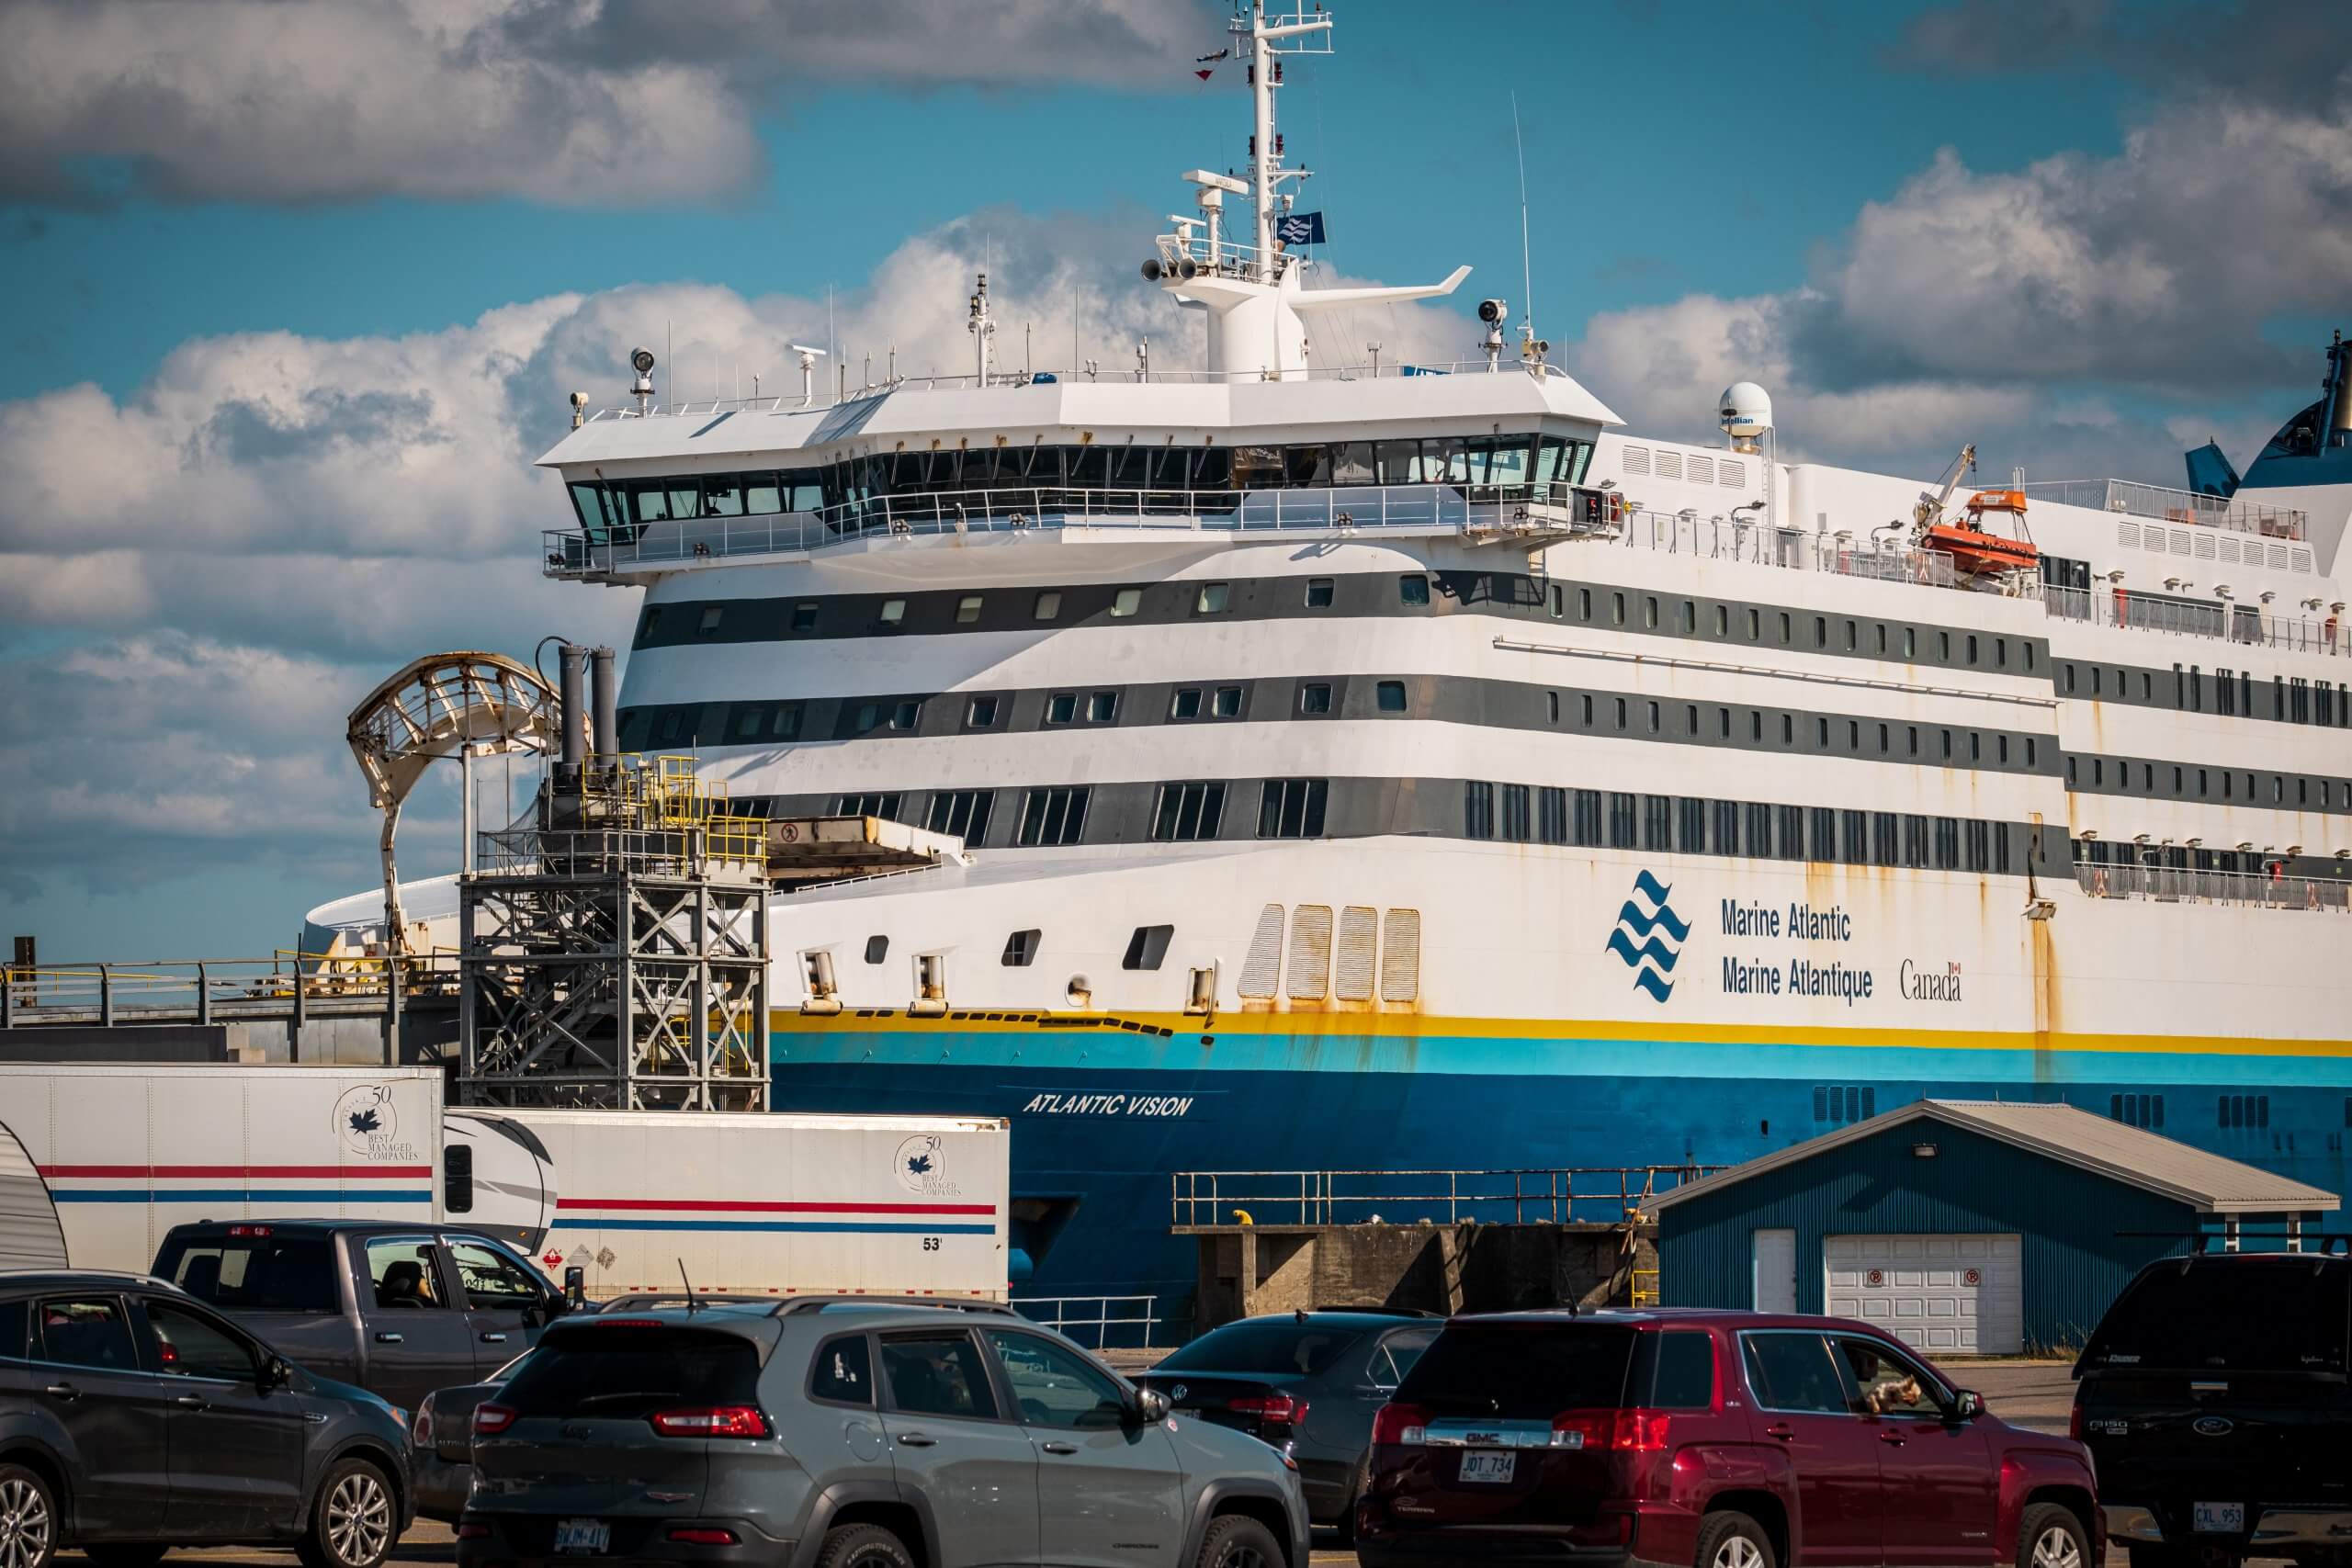 The Atlantic Vision ferry from North Sydney, Nova Scotia to Port aux Basques, Newfoundland